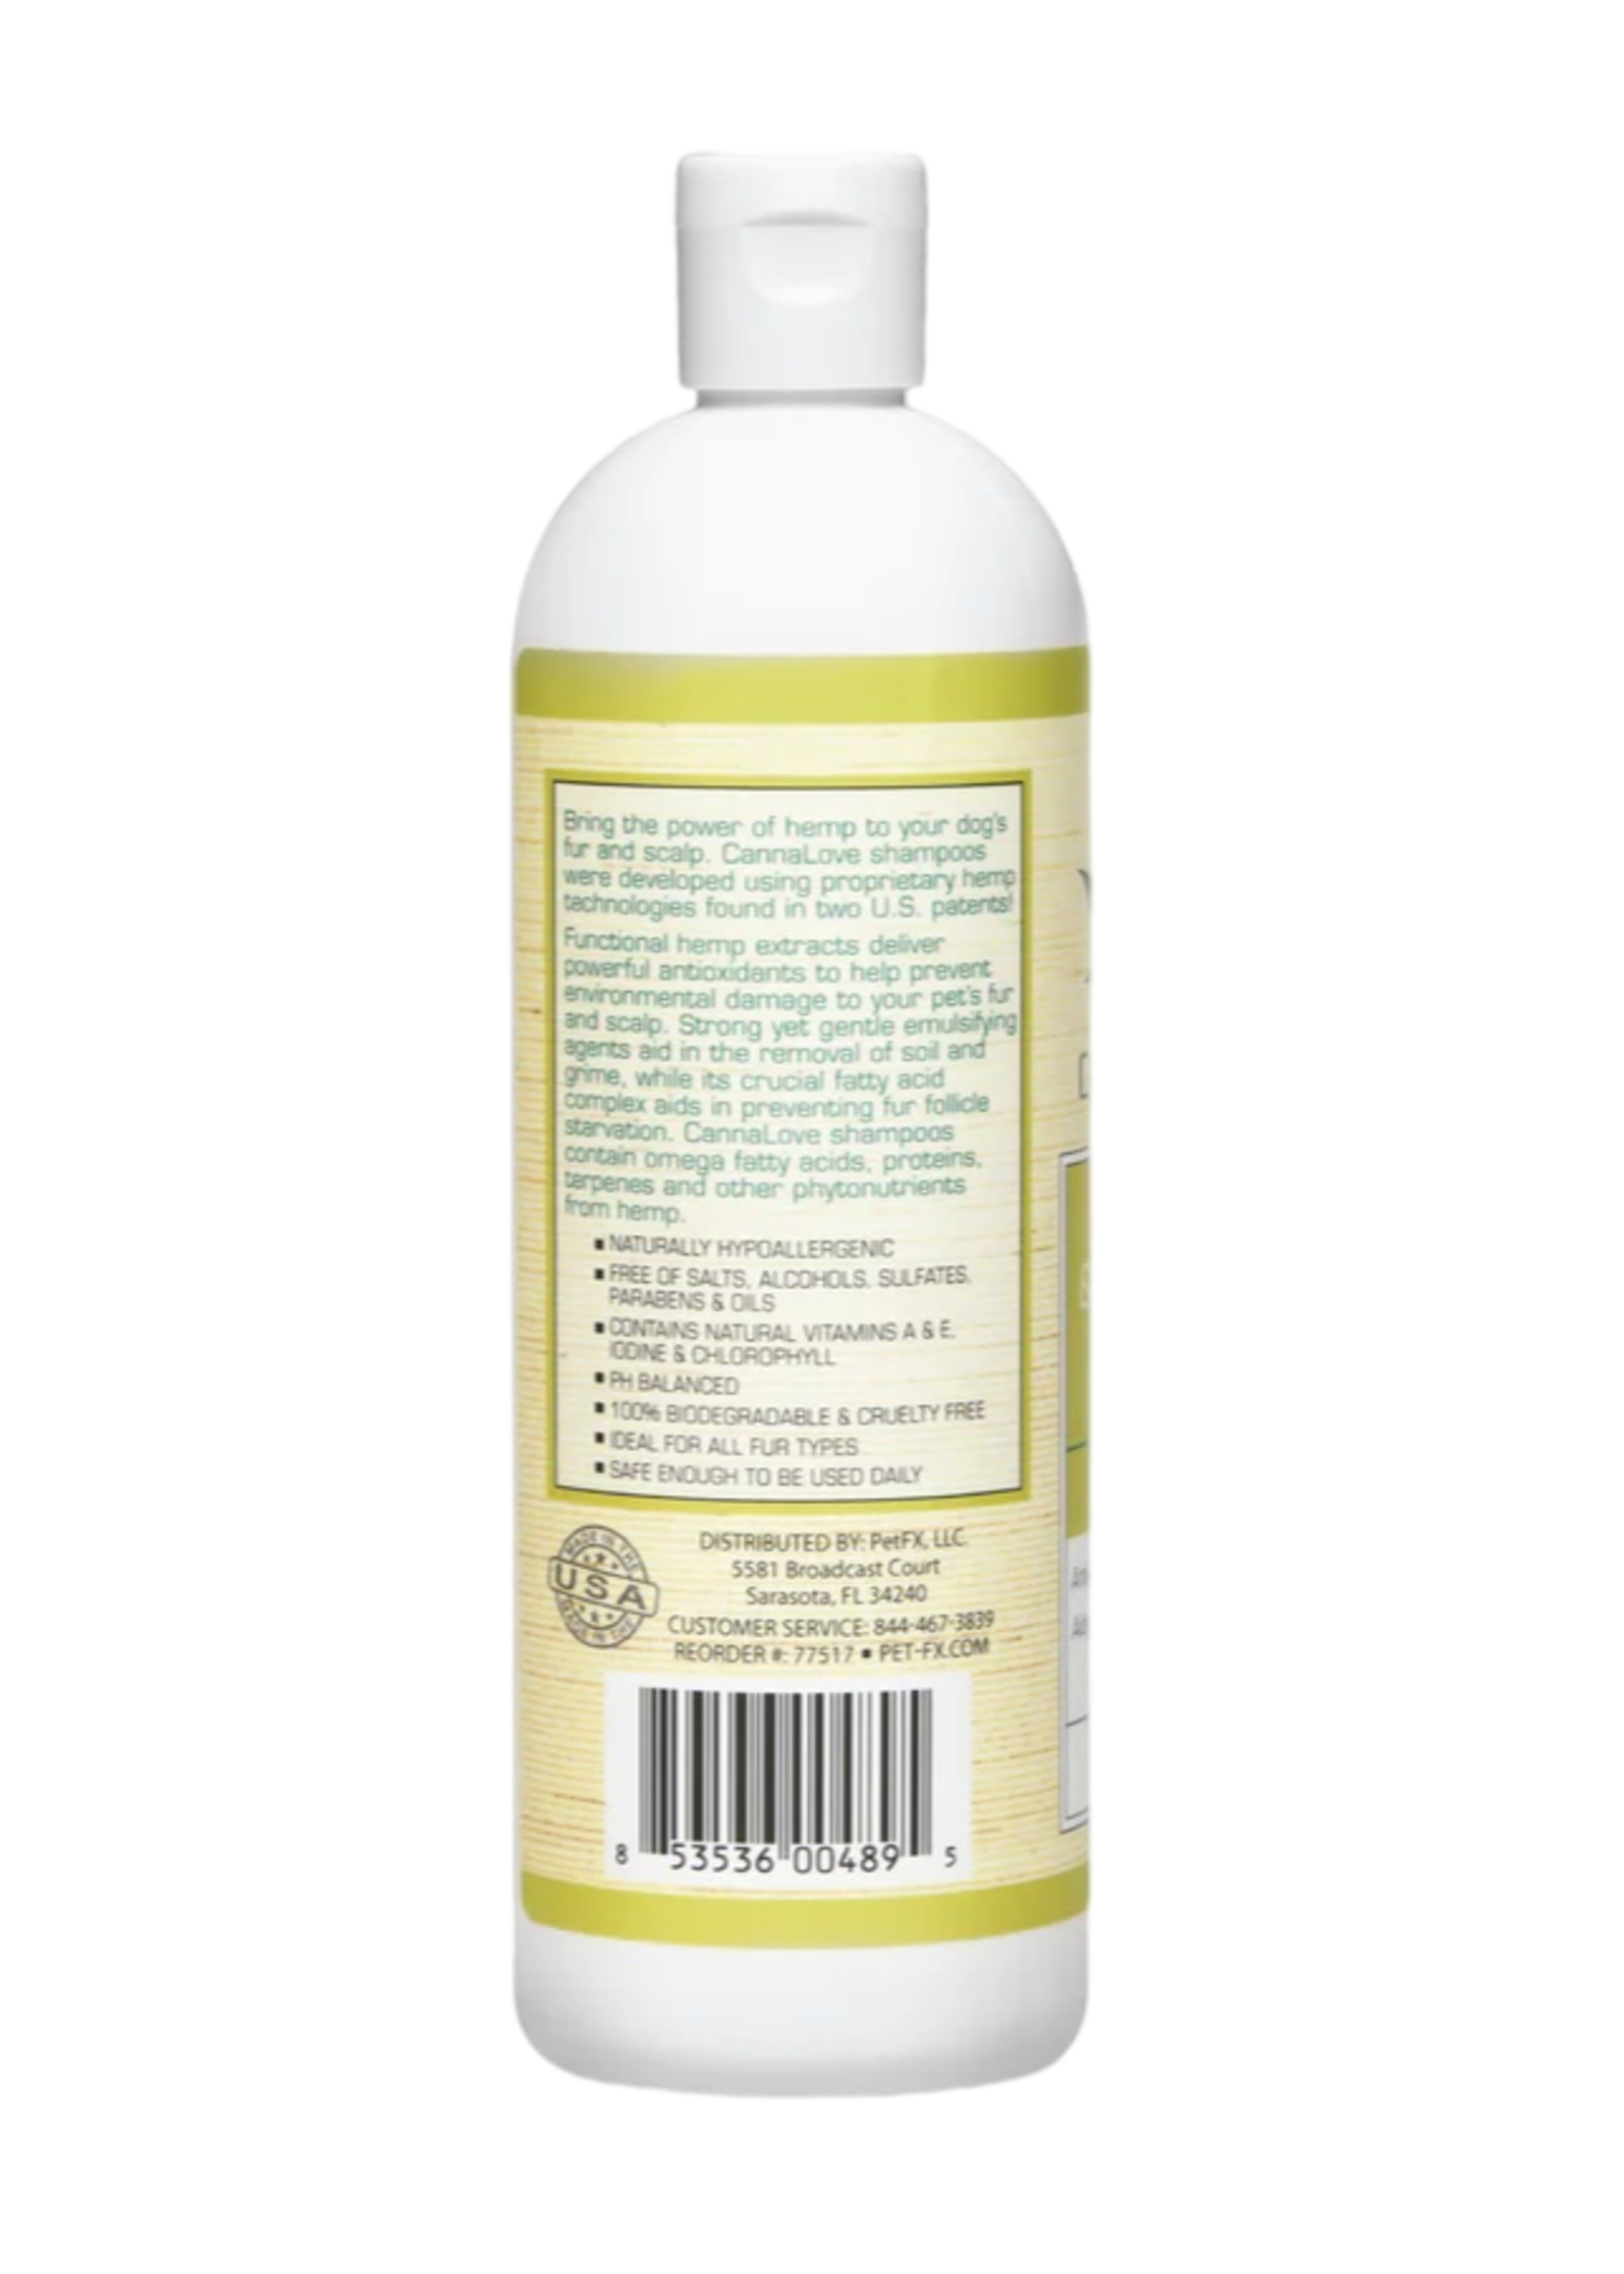 CannaLove Allergy & Itch Relief Shampoo